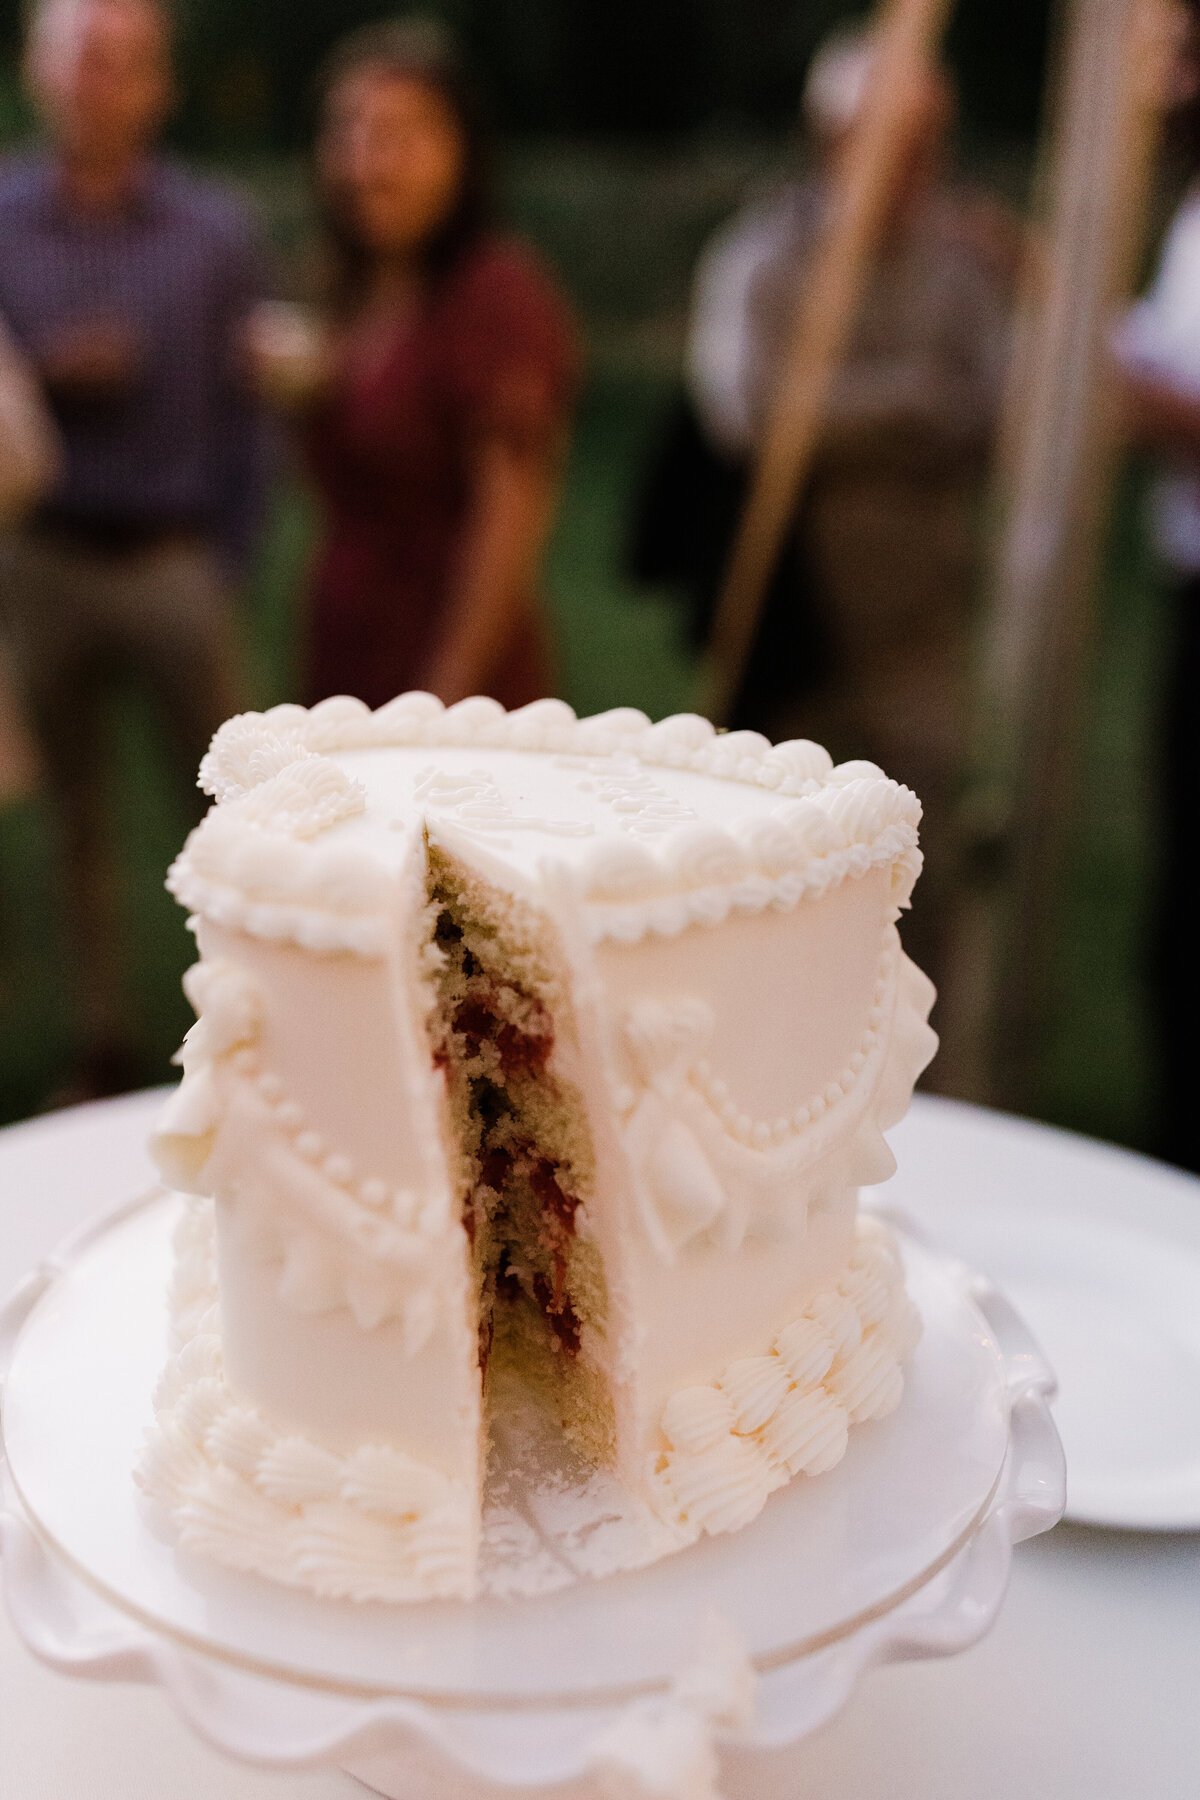 Wedding cake with slice cut